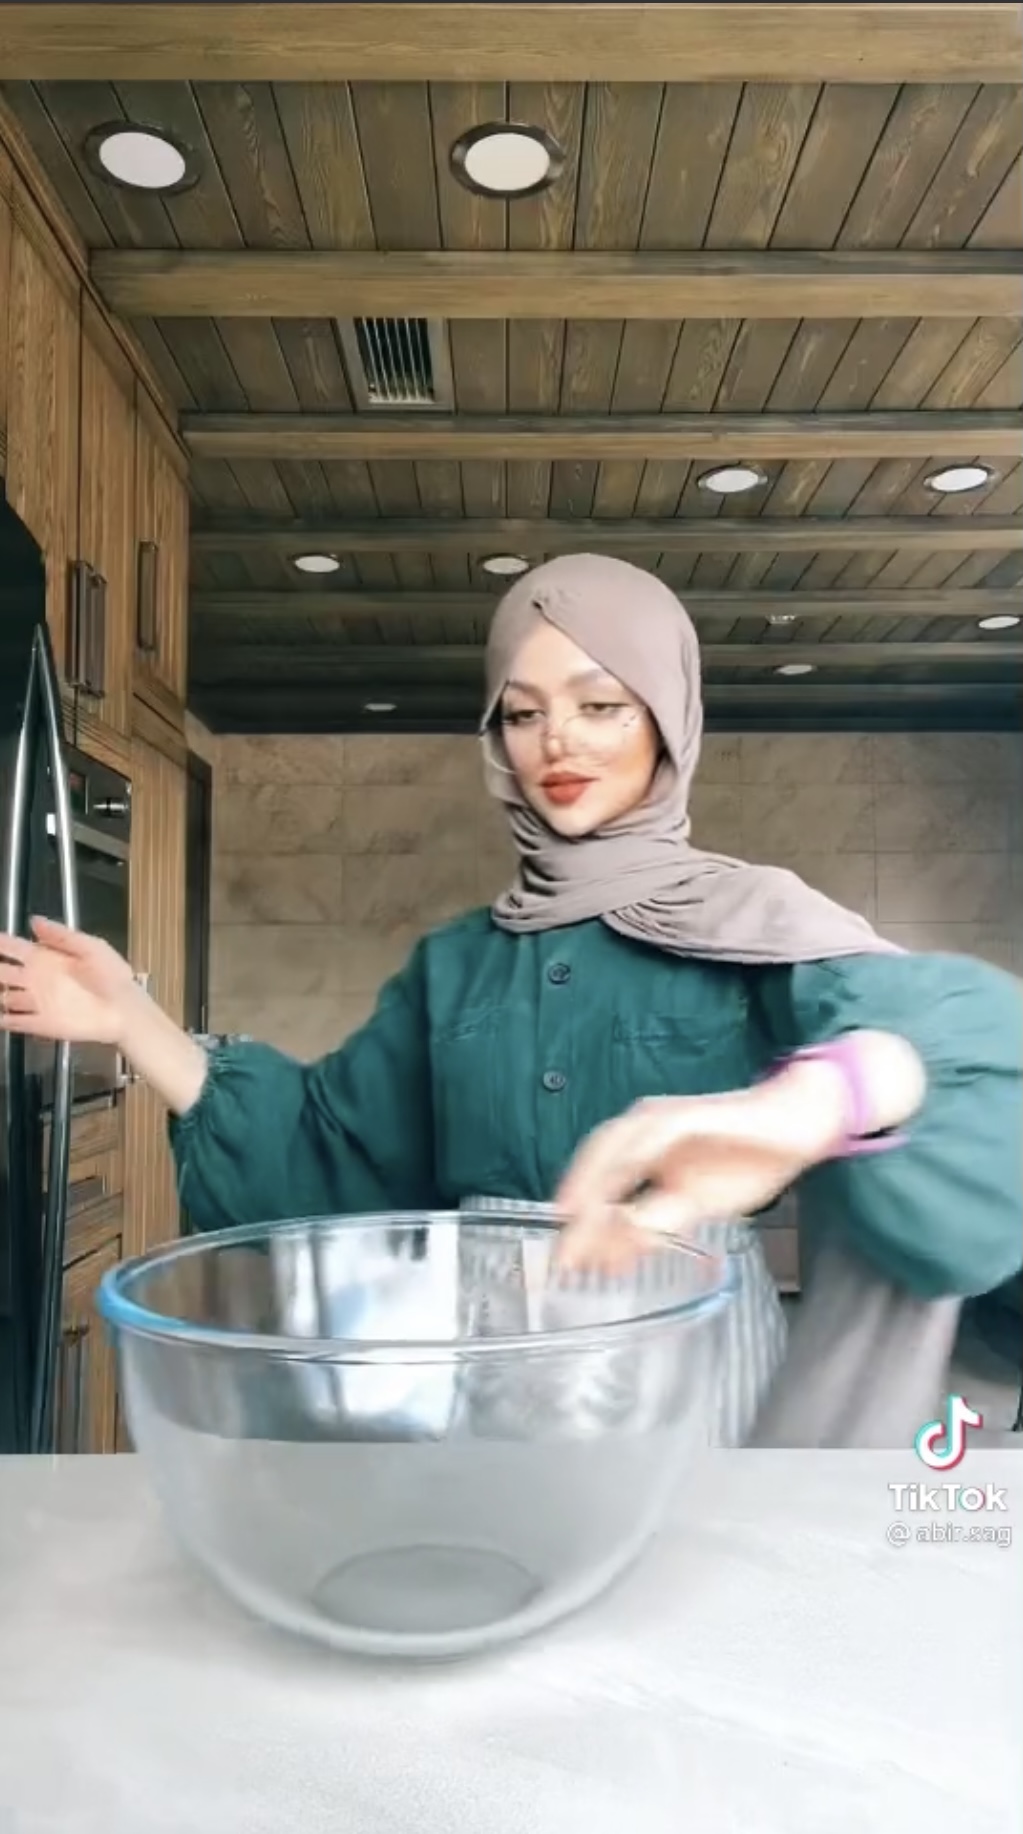 A screenshot shows Abir Saghir preparing utensils to make pho-style noodles in a video on her @abir.sag TikTok channel.